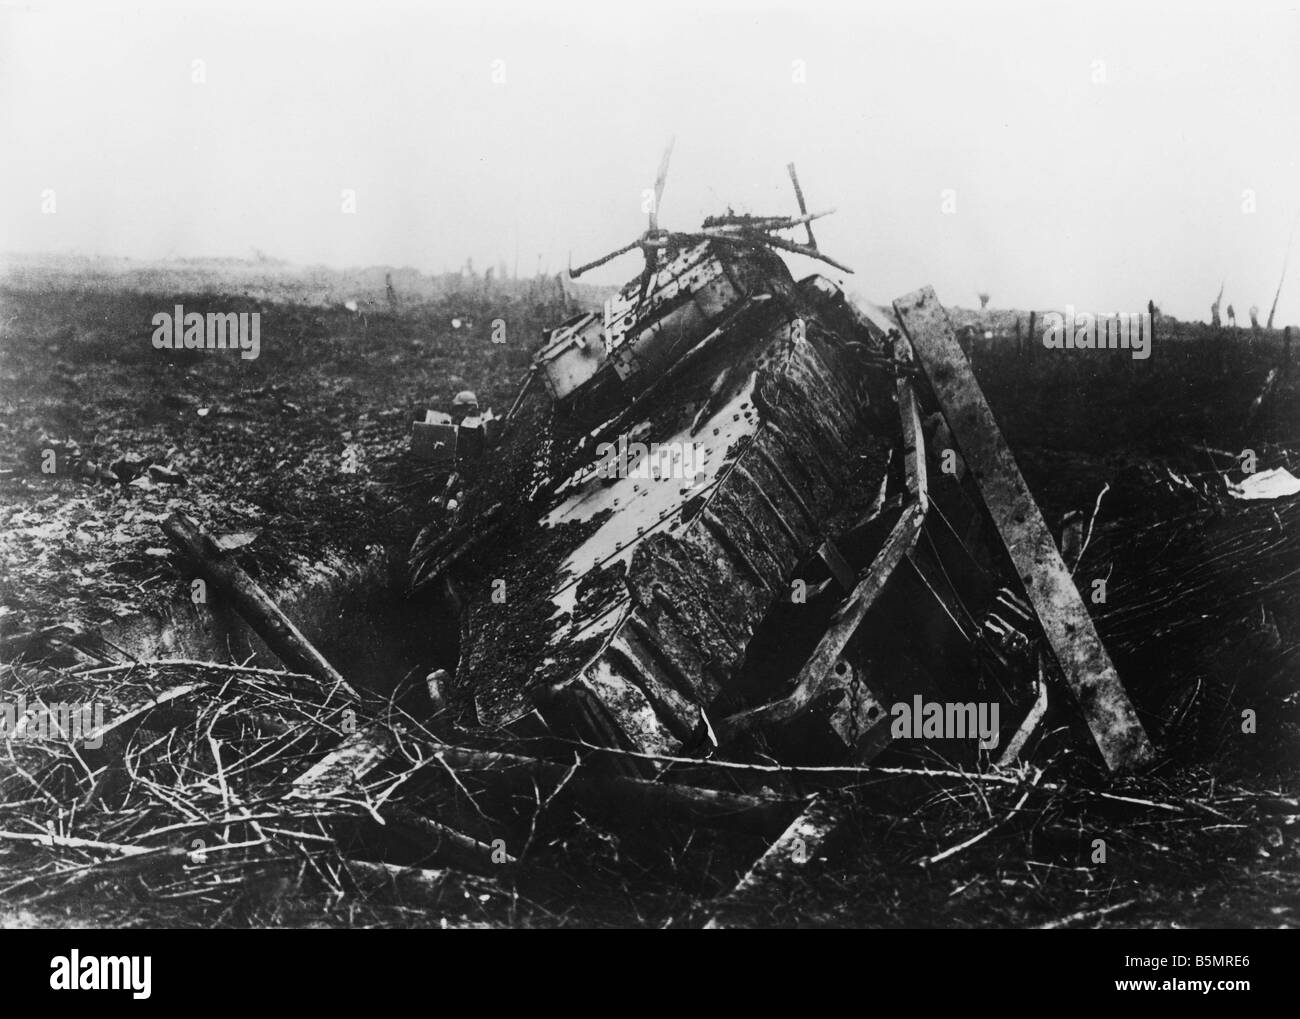 9 1917 11 20 A2 18 E Destroyed Eng tank Nov 1917 World War 1 1914 18 Western Front Tank battle at Cambrai 20th 29th Novem ber 19 Stock Photo